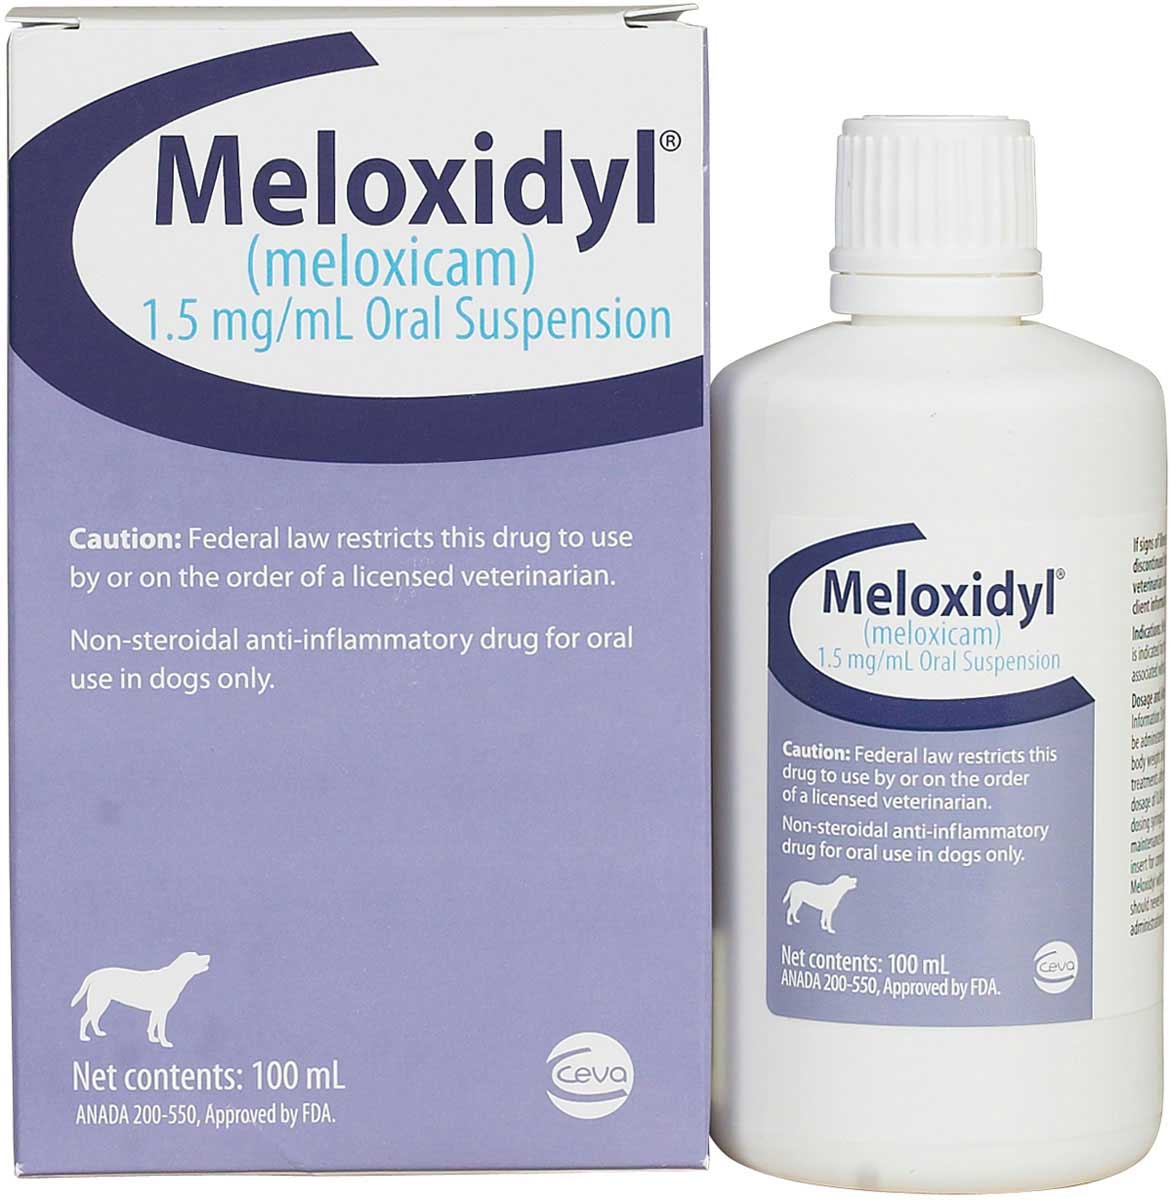 Meloxidyl for Dogs Ceva Animal Health - Safe.Pharmacy|Arthritis, Pain Inflammation | Dog Rx | Pet